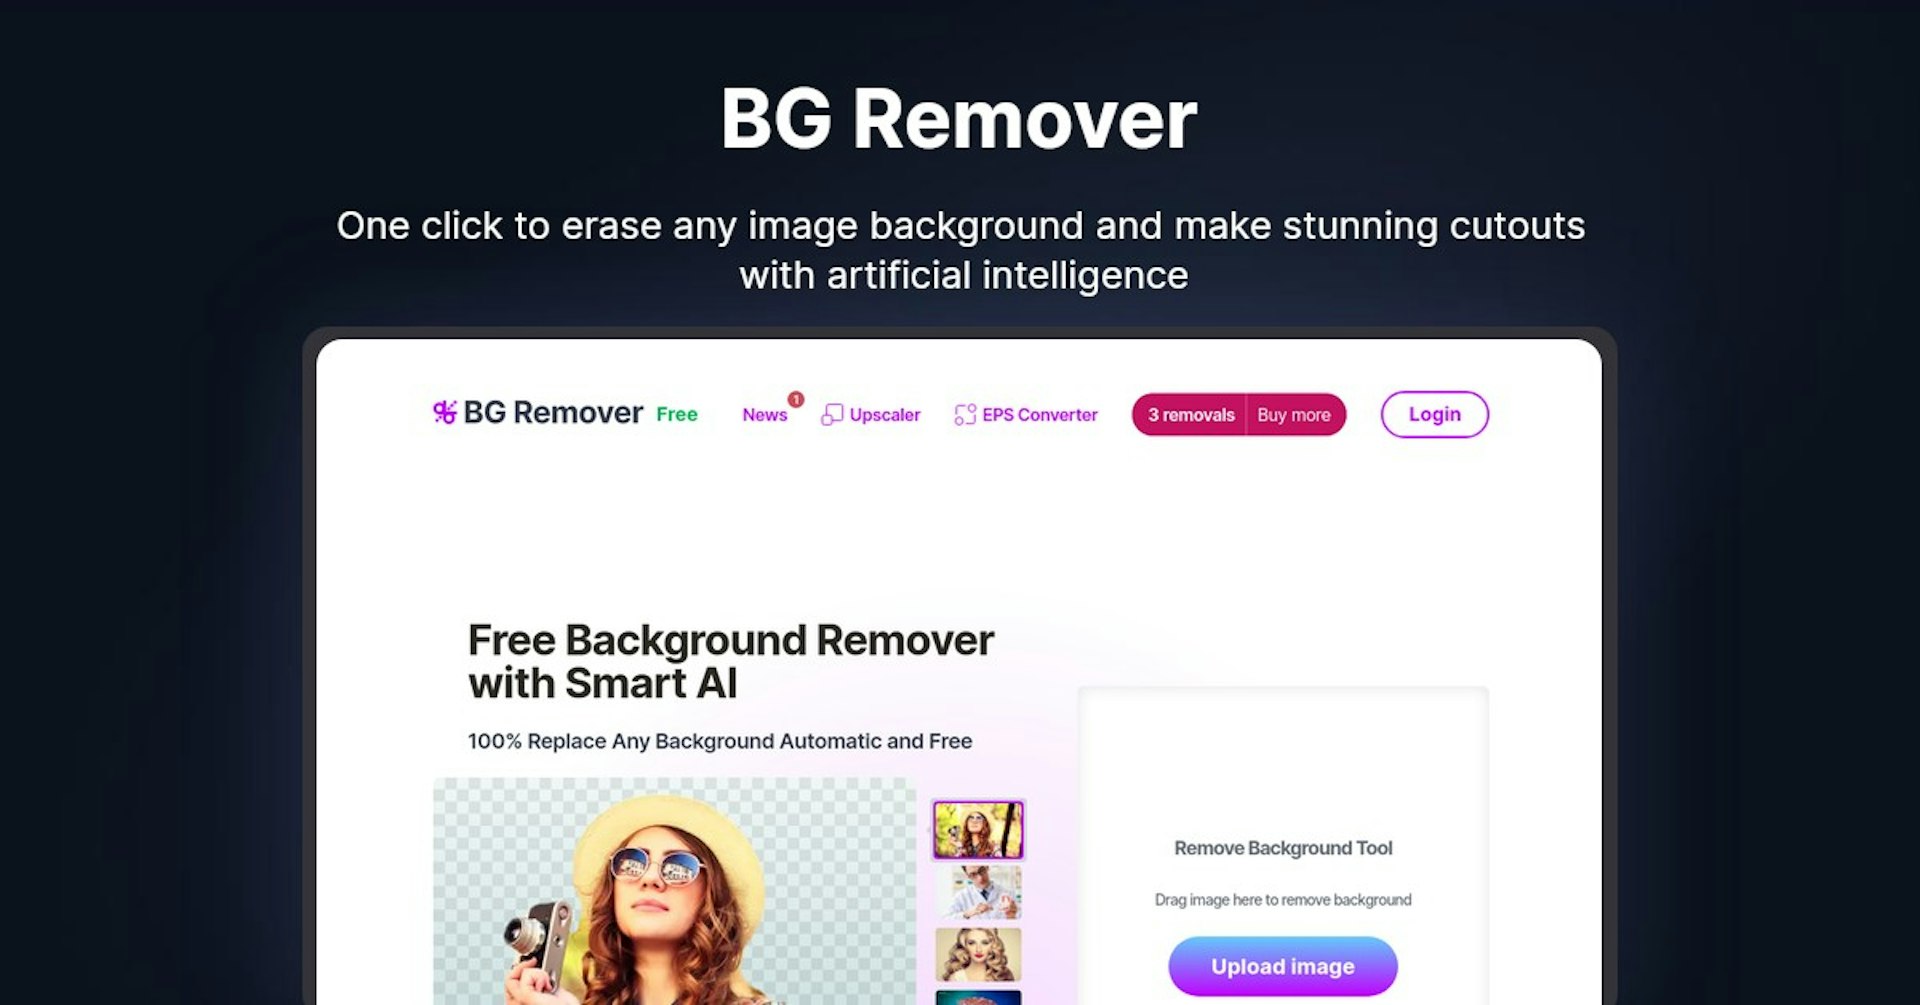 BG Remover